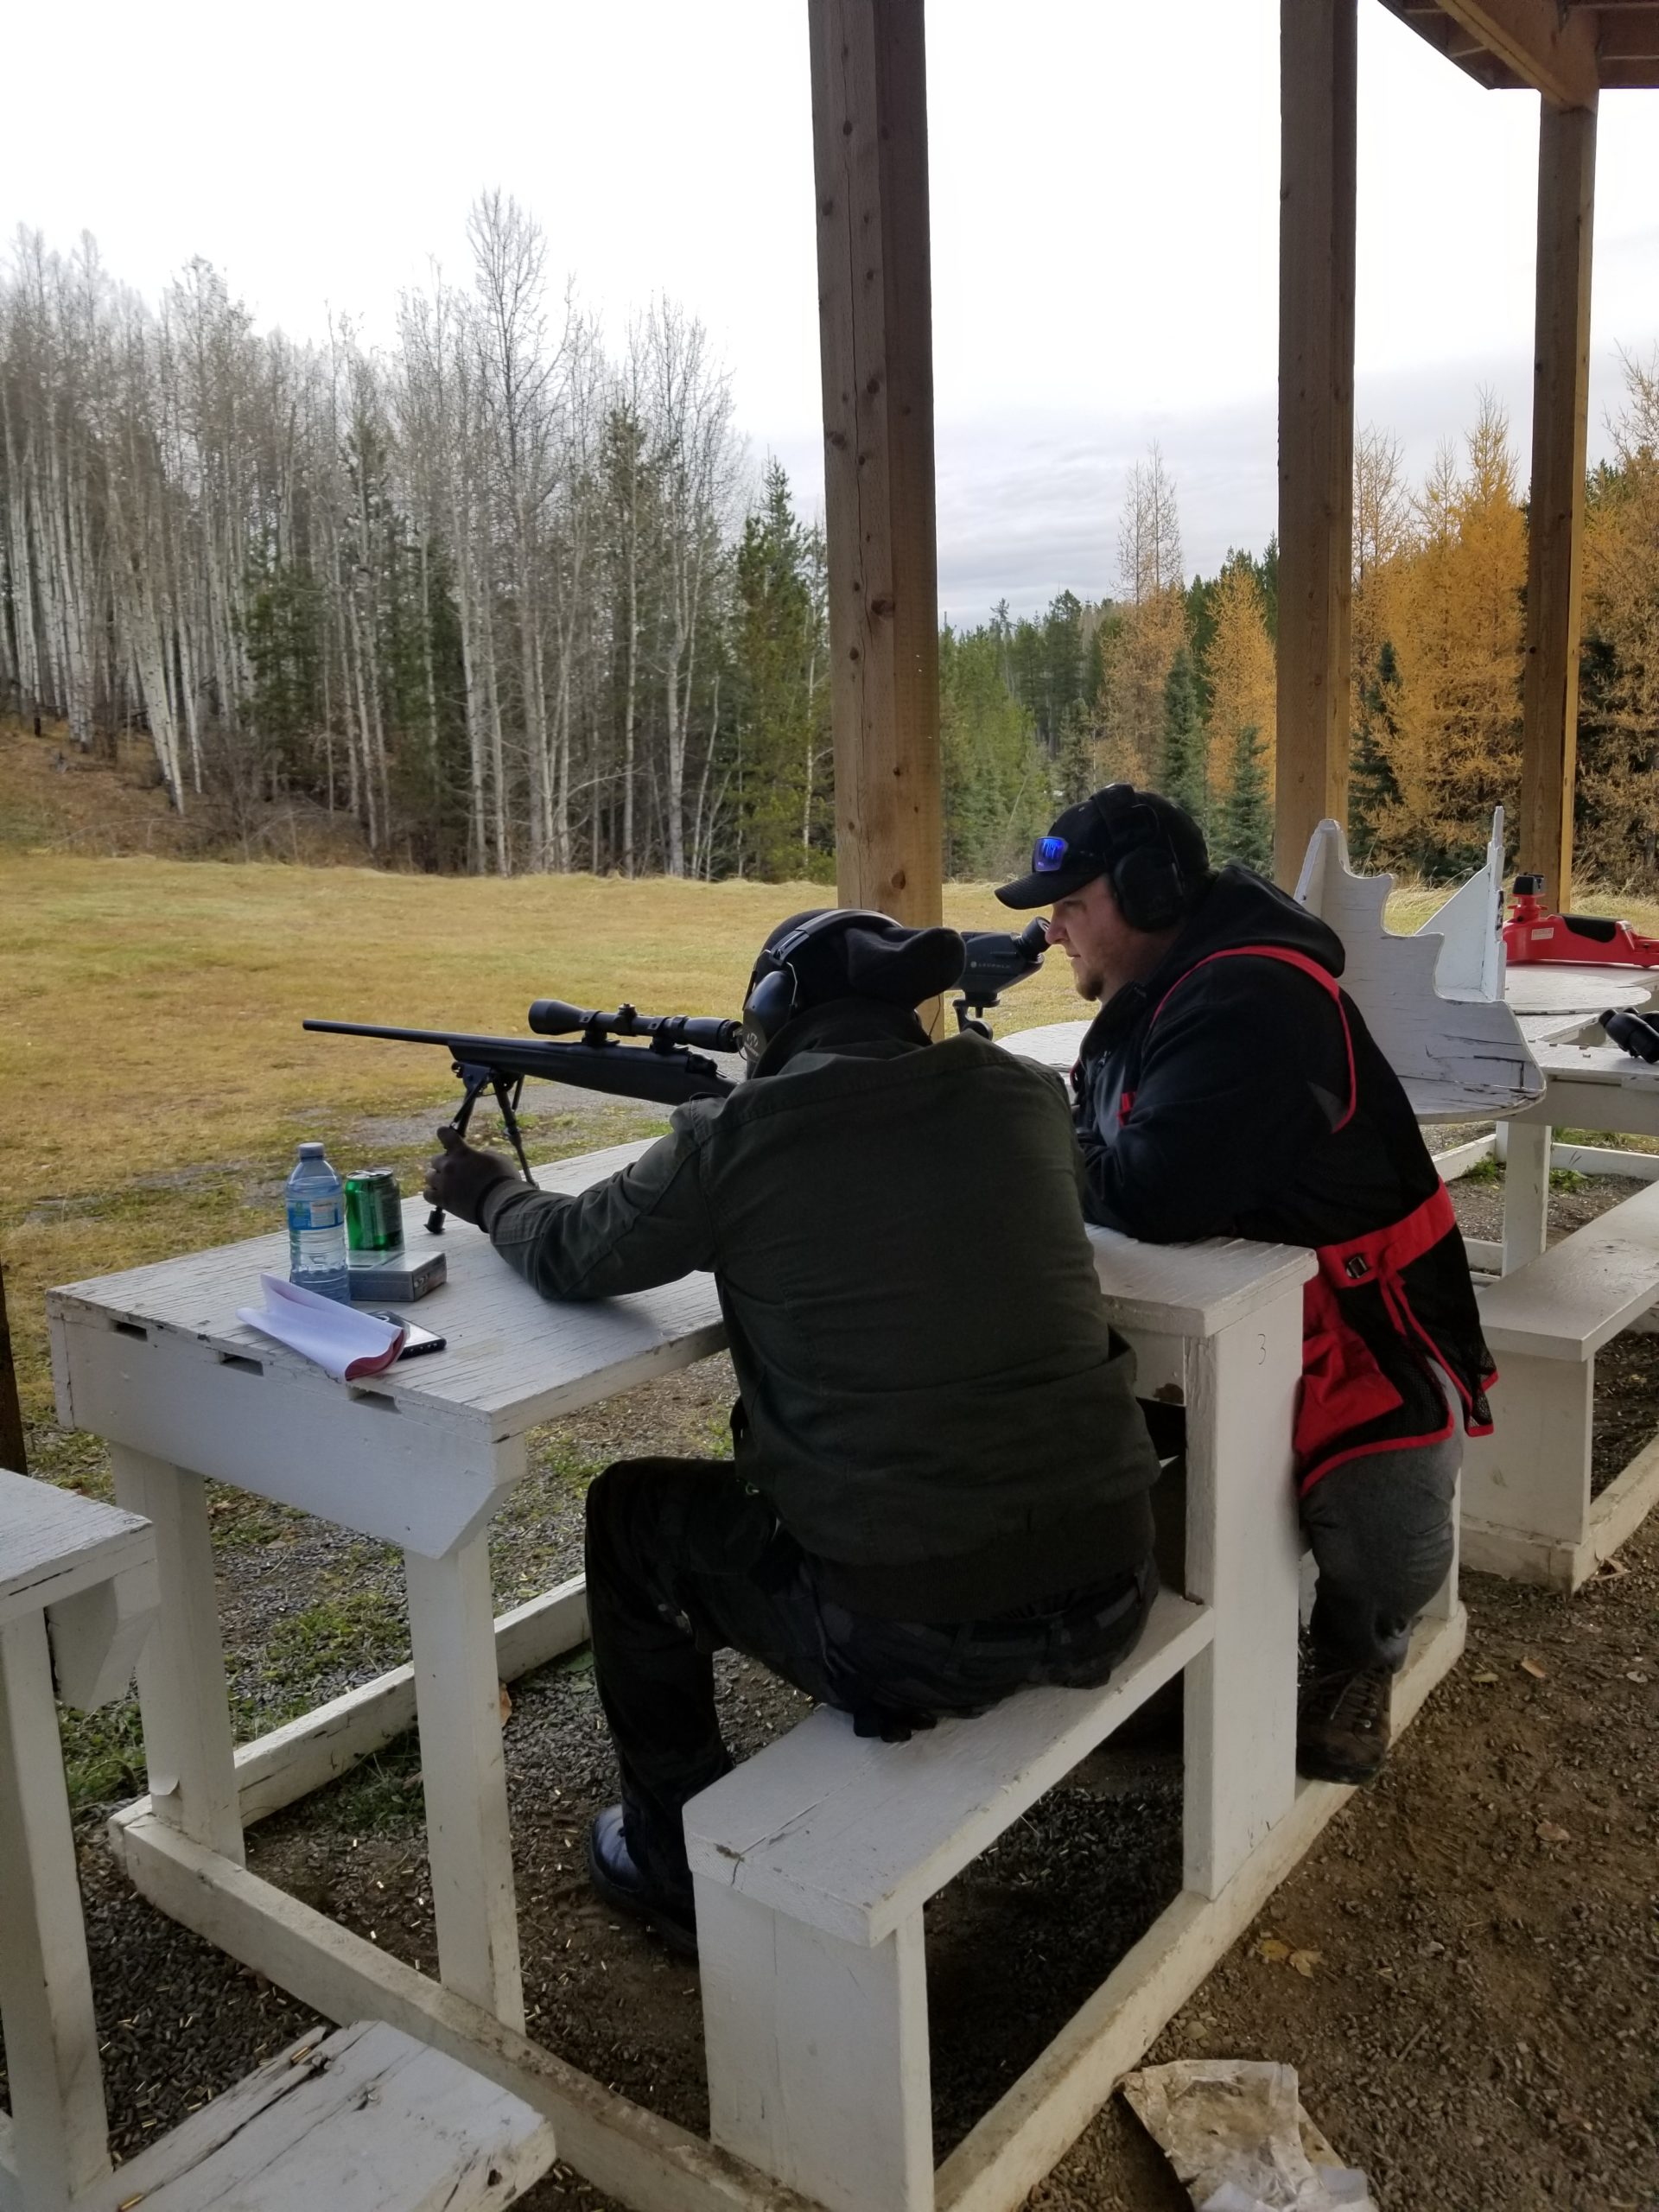 Preparing Your Rifle for Hunting Season